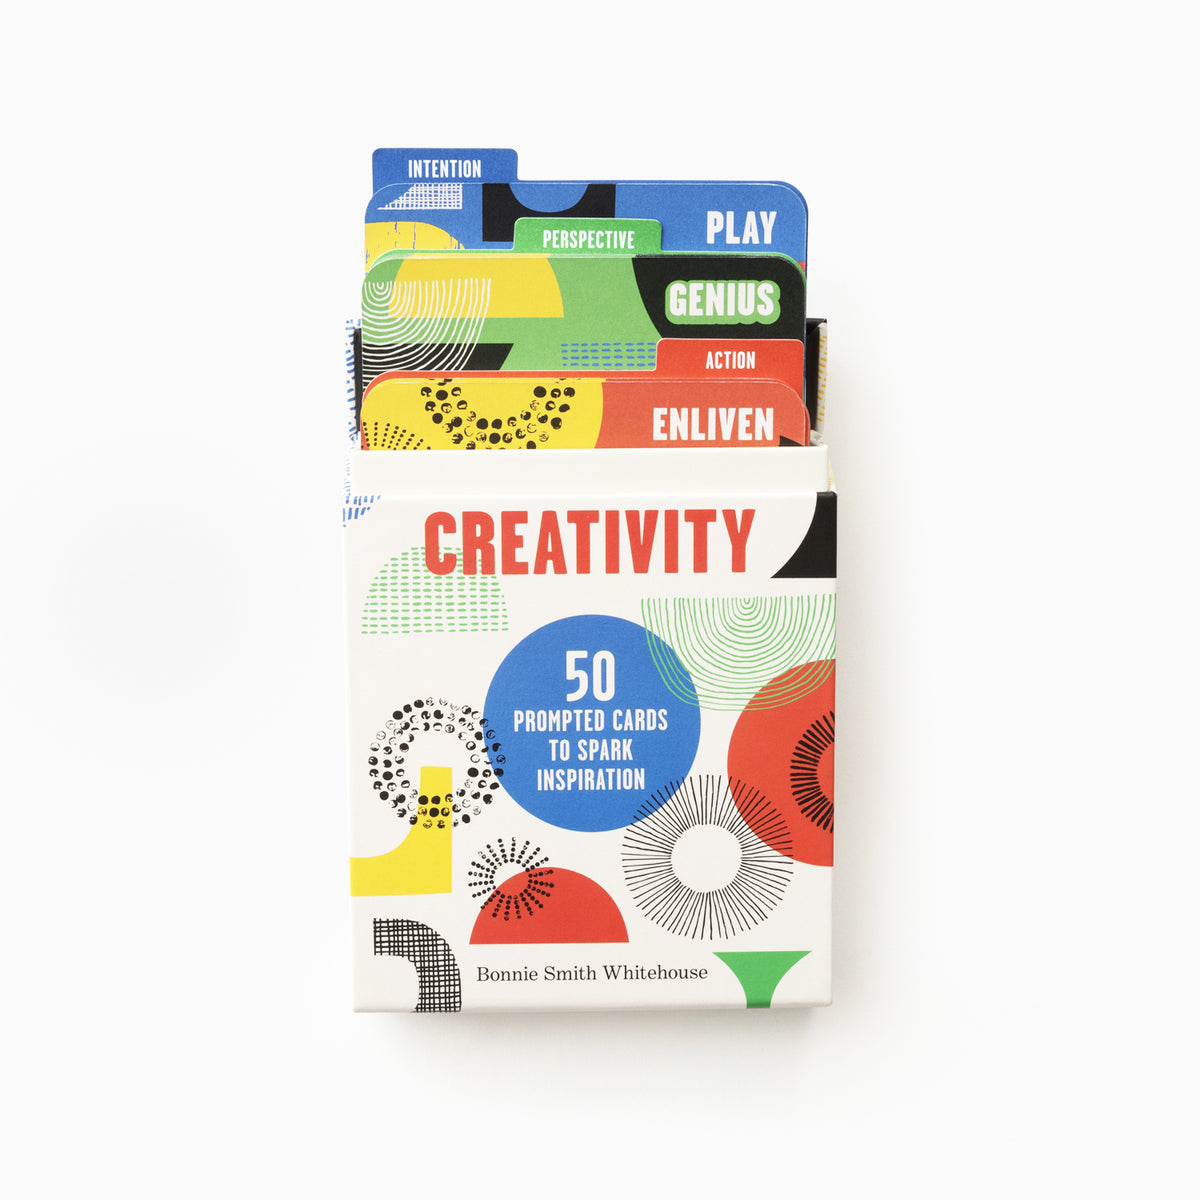 Kickstart Creativity: 50 prompted cards to spark inspiration